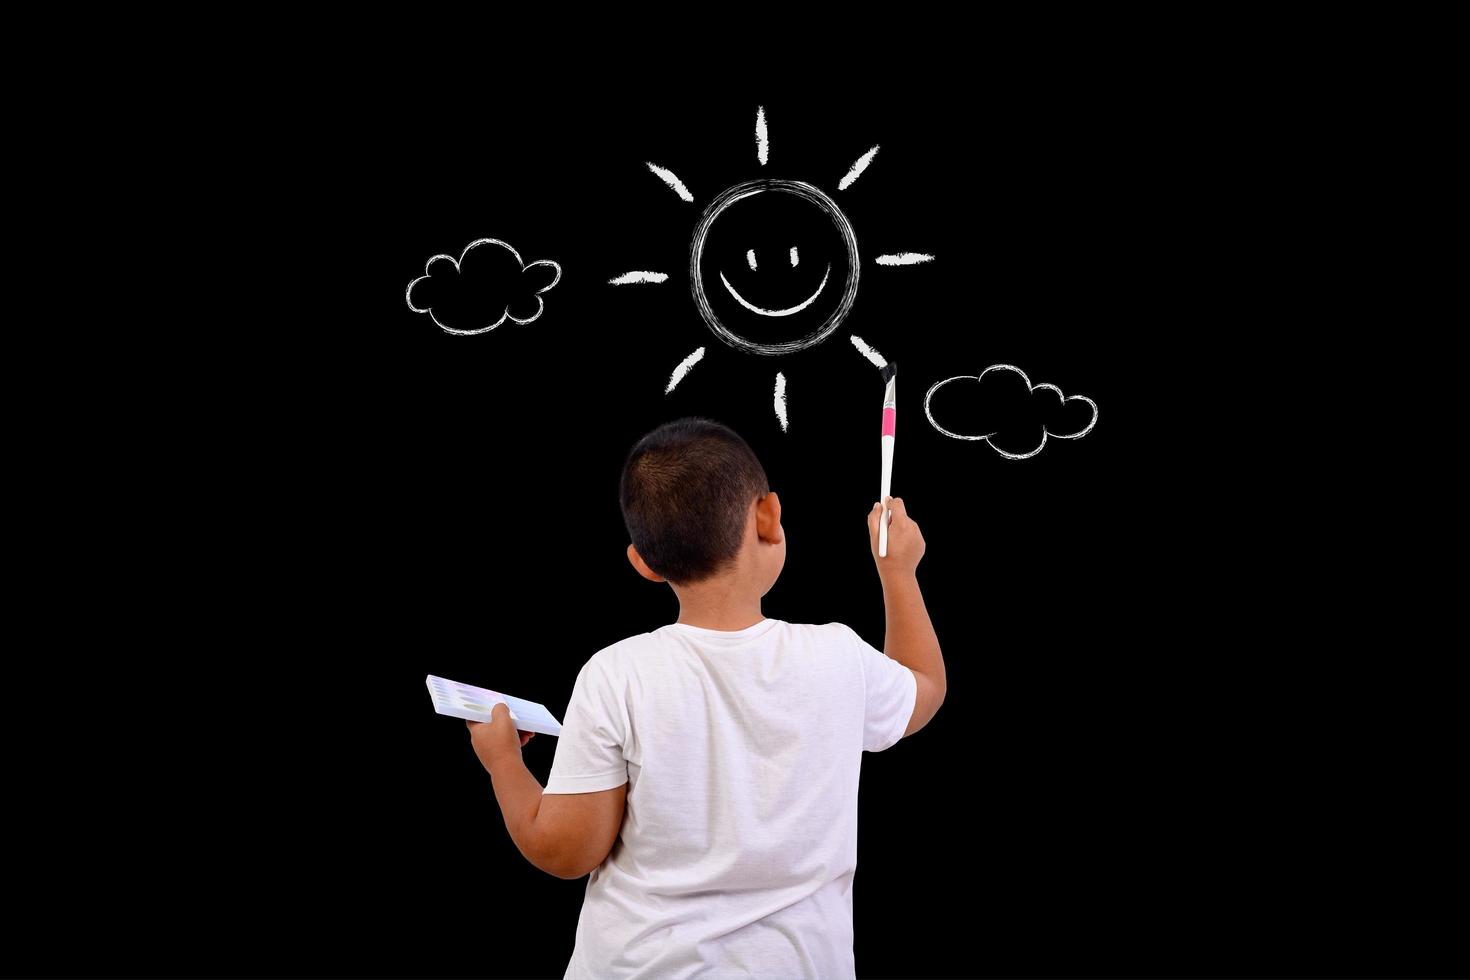 A boy draws the sky and the sun on a chalkboard photo